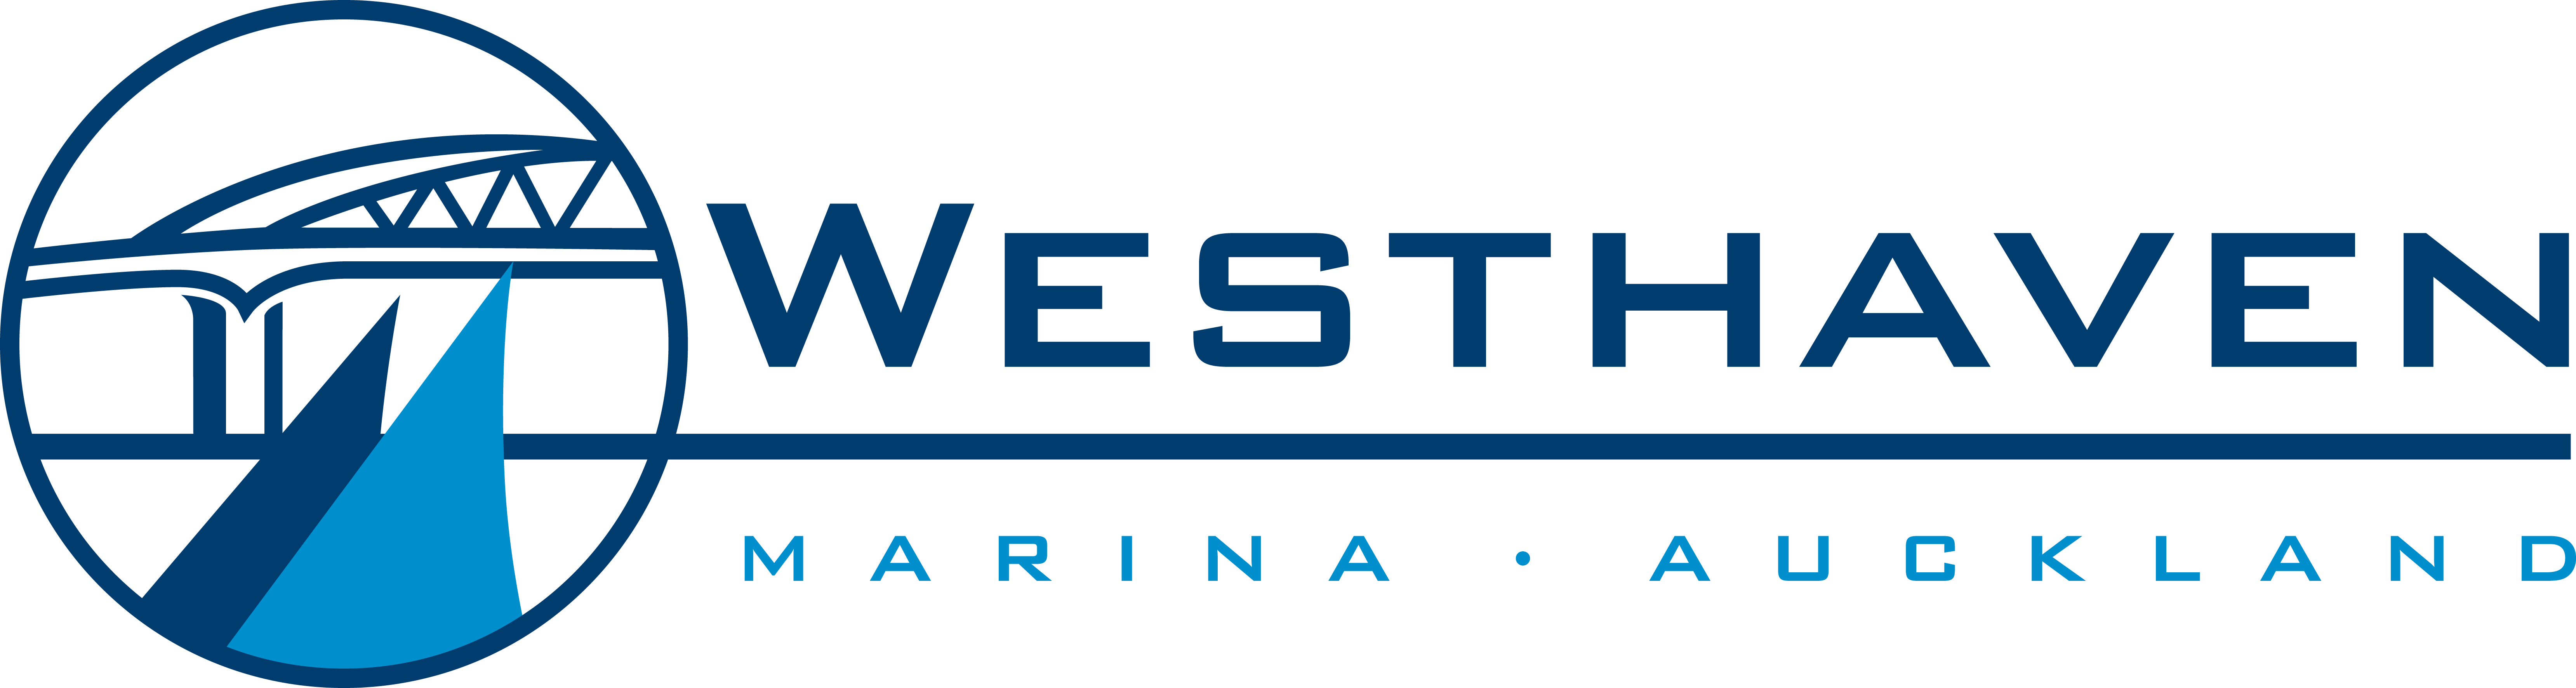 Westhaven Marina Auck logo v3